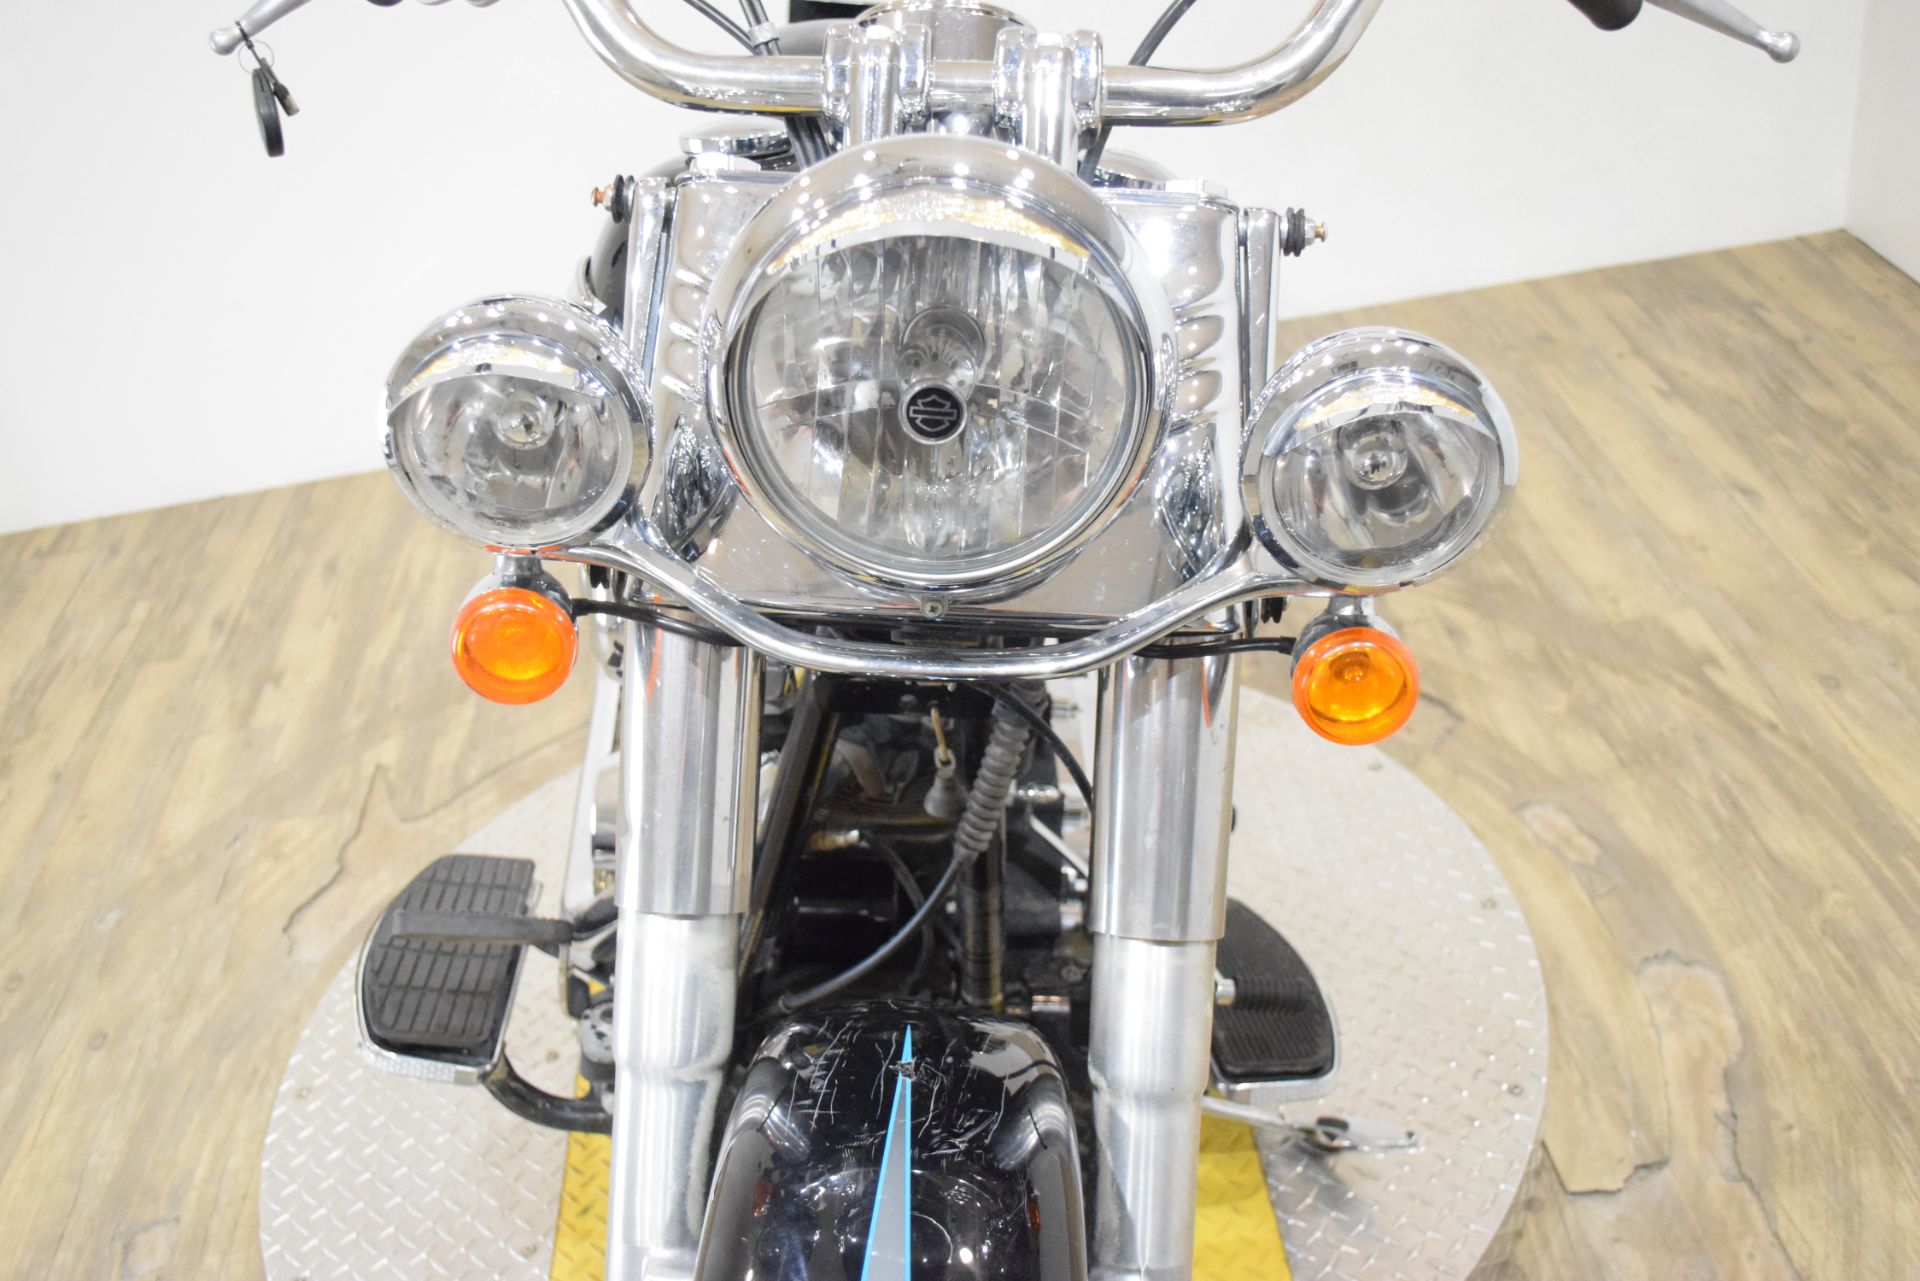 2008 Harley-Davidson Softail® Fat Boy® in Wauconda, Illinois - Photo 12